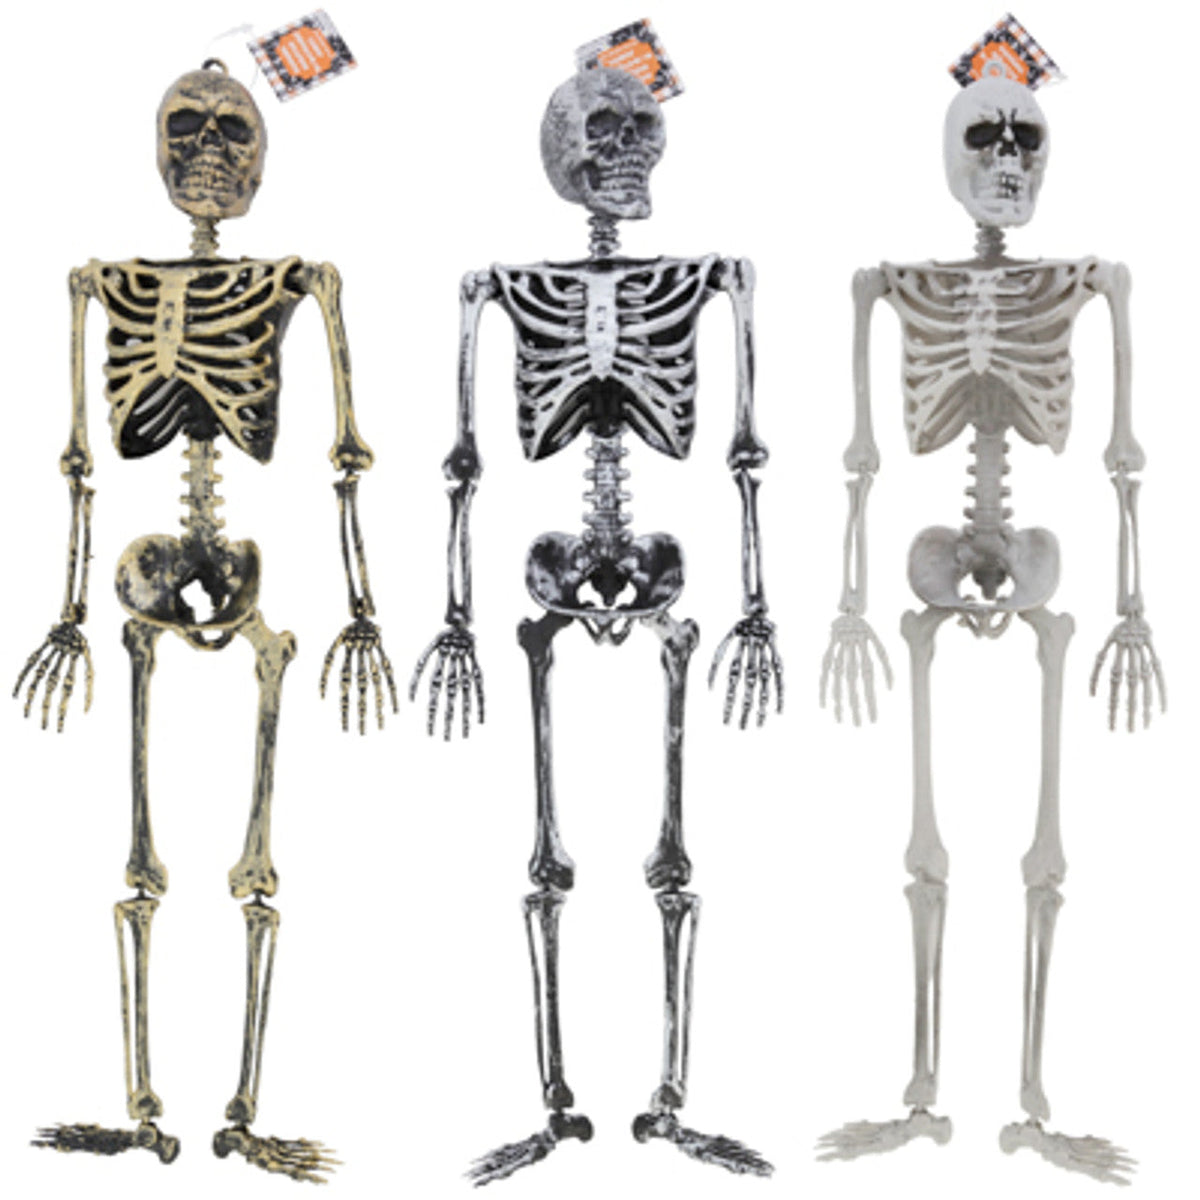 REGEN PRODUCTS CORP. Halloween Hanging Skeleton, 24 Inches, Assortment, 1 Count